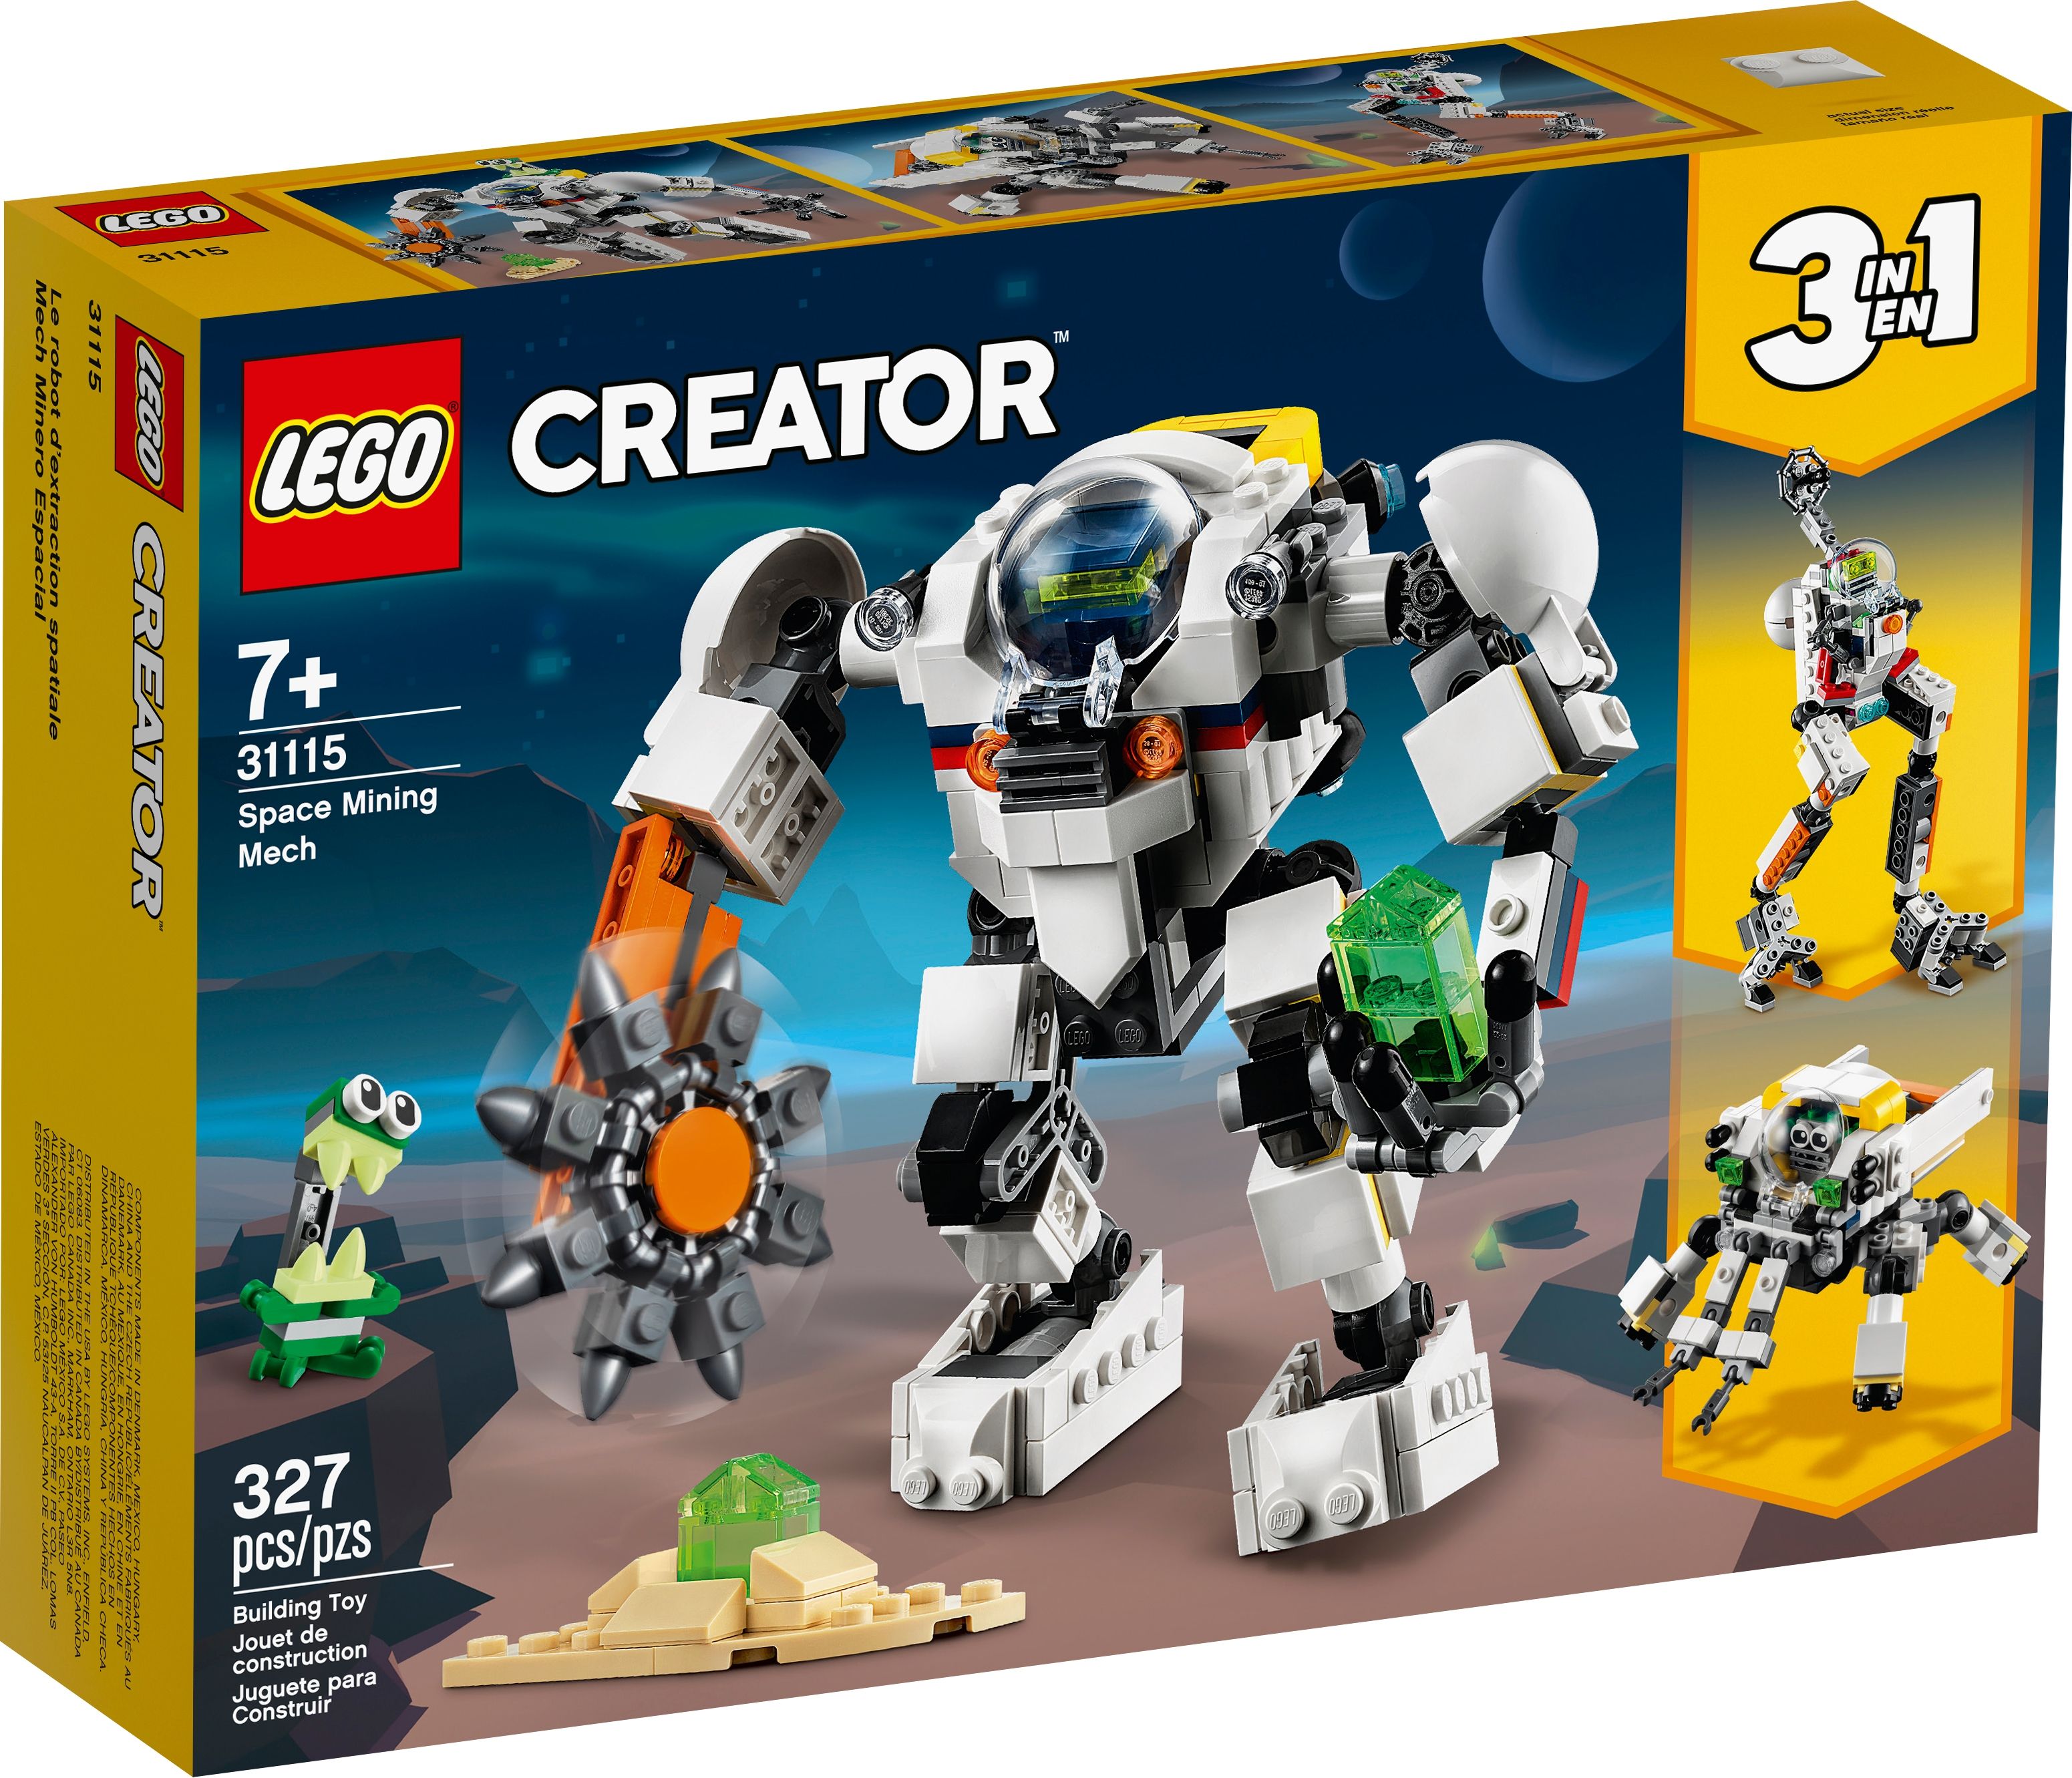 LEGO Creator 31115 Weltraum-Mech LEGO_31115_alt1.jpg